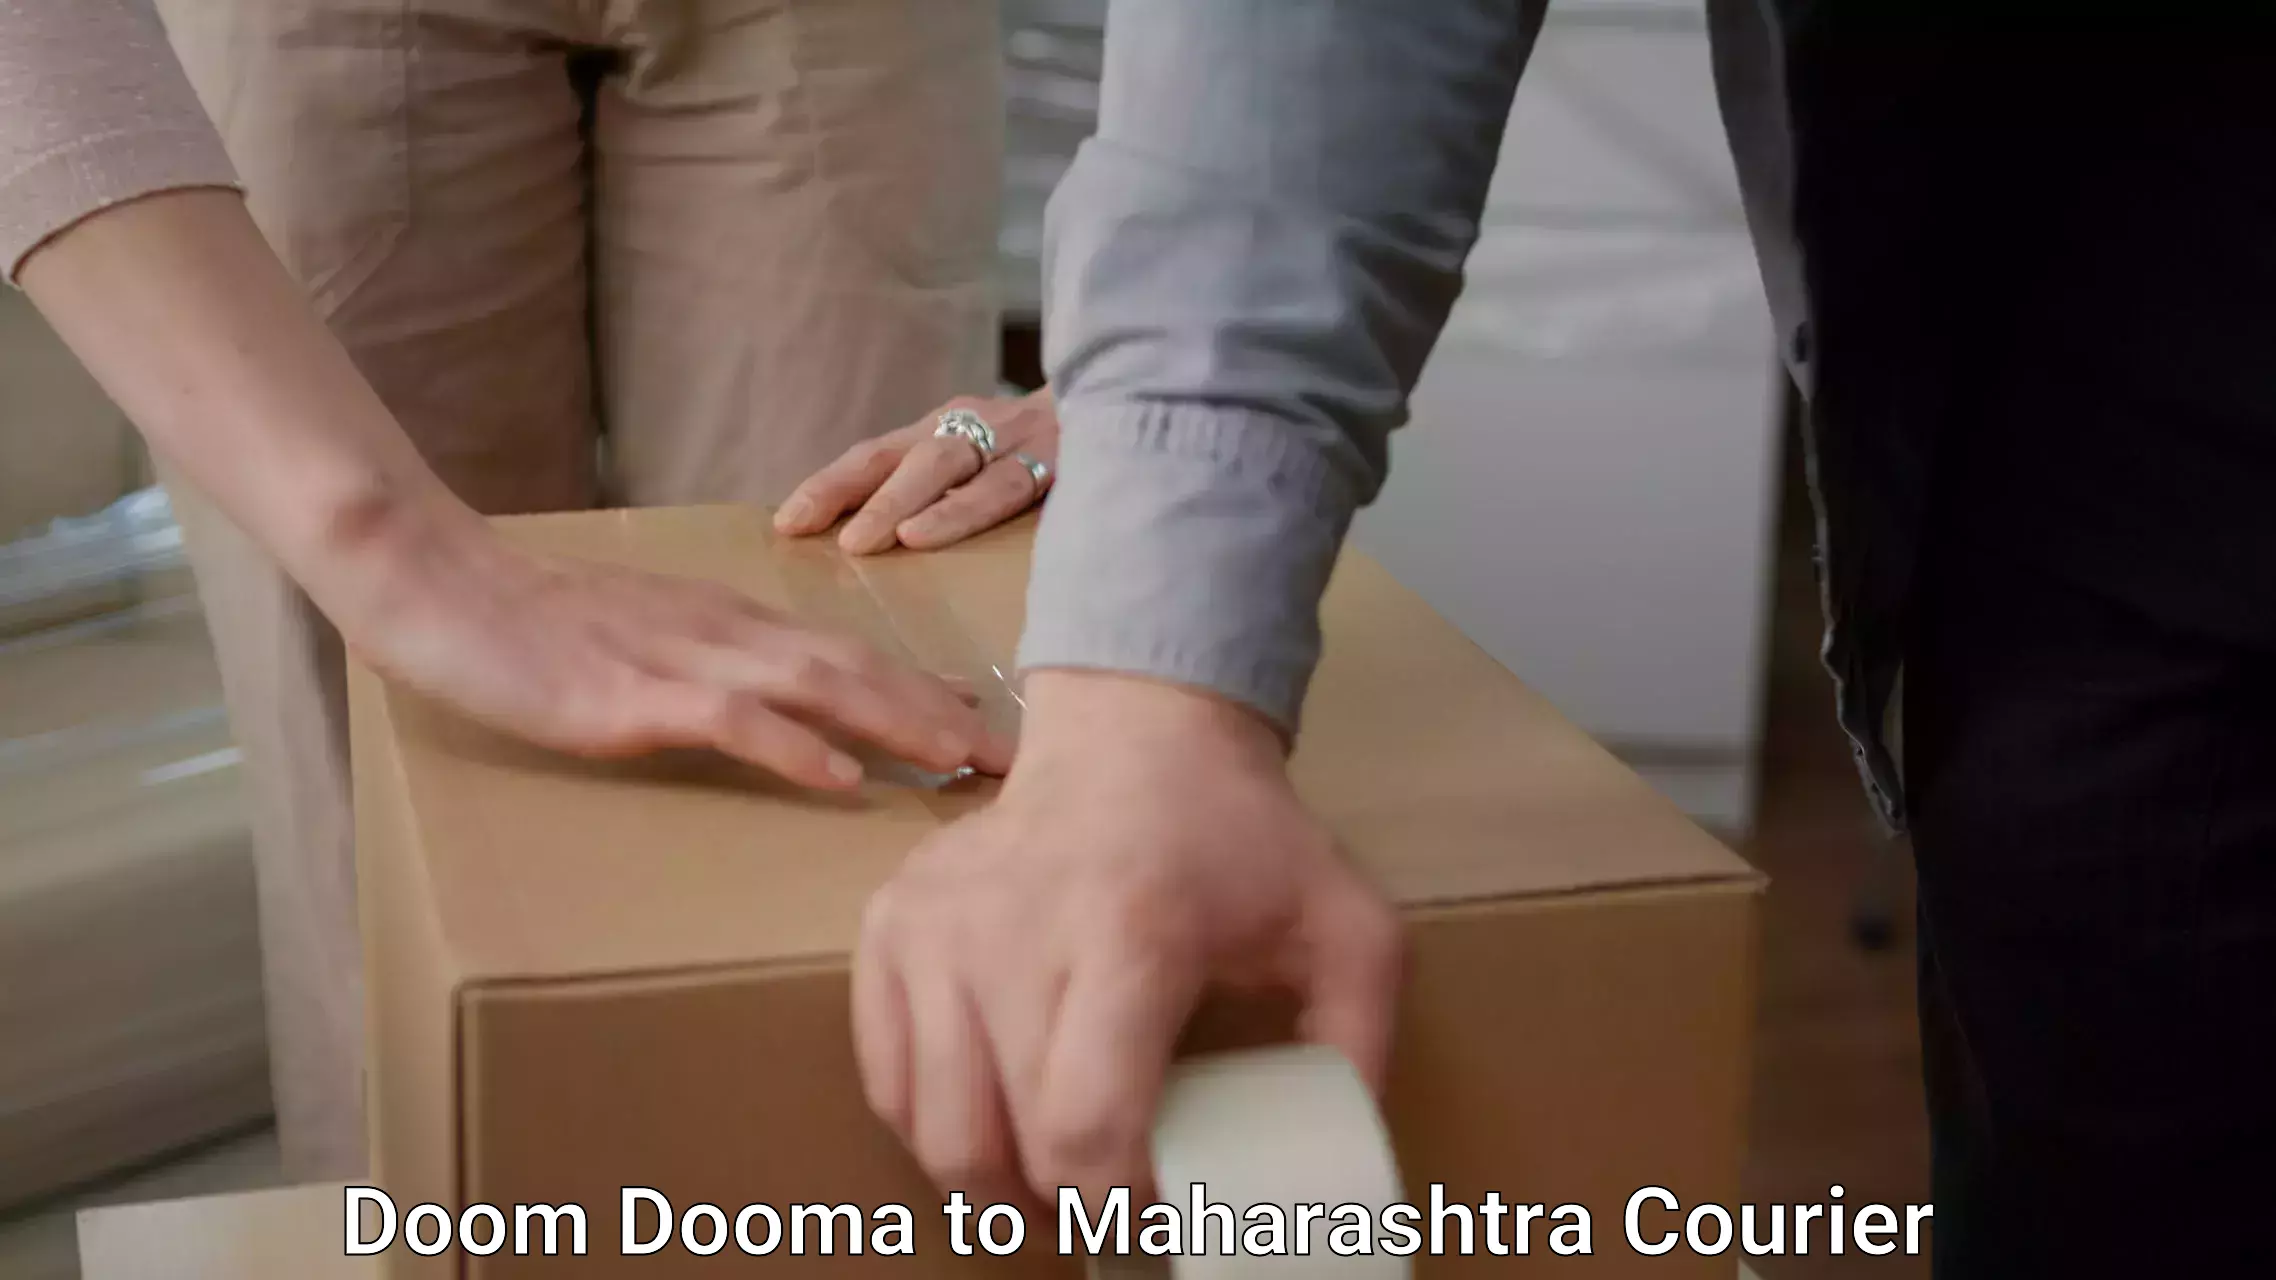 Moving and storage services Doom Dooma to Mumbai University